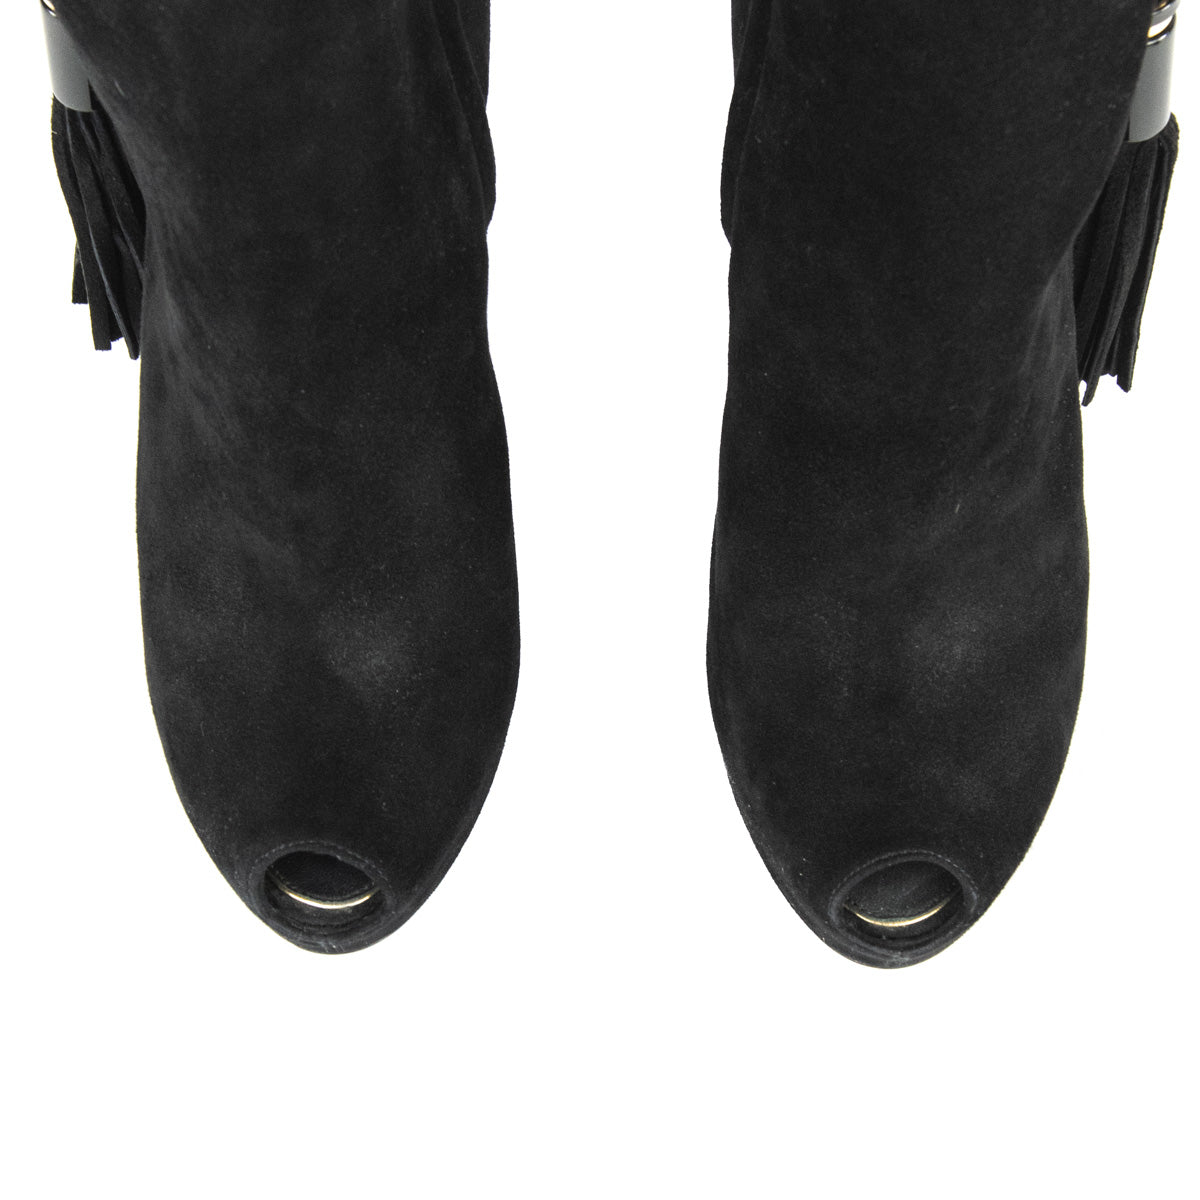 Louis Vuitton Black Suede Tassel Peep Toe Ankle Boots Size US 11 | EU 41 - Love that Bag etc - Preowned Authentic Designer Handbags & Preloved Fashions